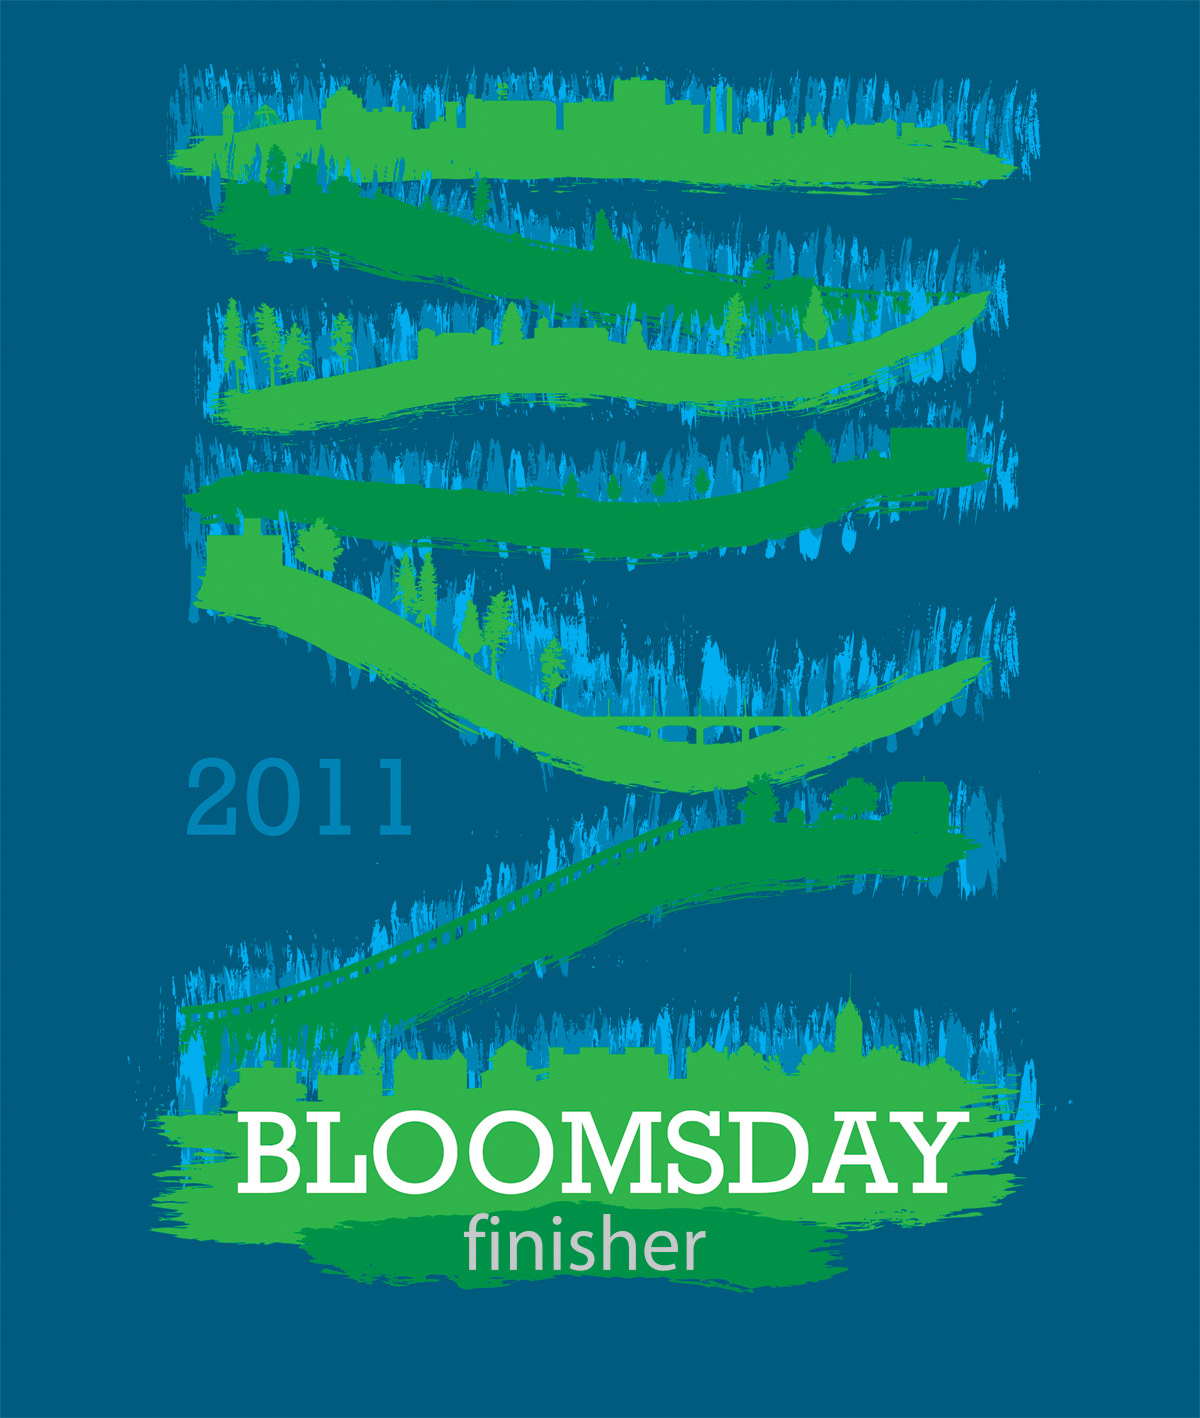 Bloomsday t-shirt graphic Spokane Washington Idaho coeur d' alene fun run race lilac